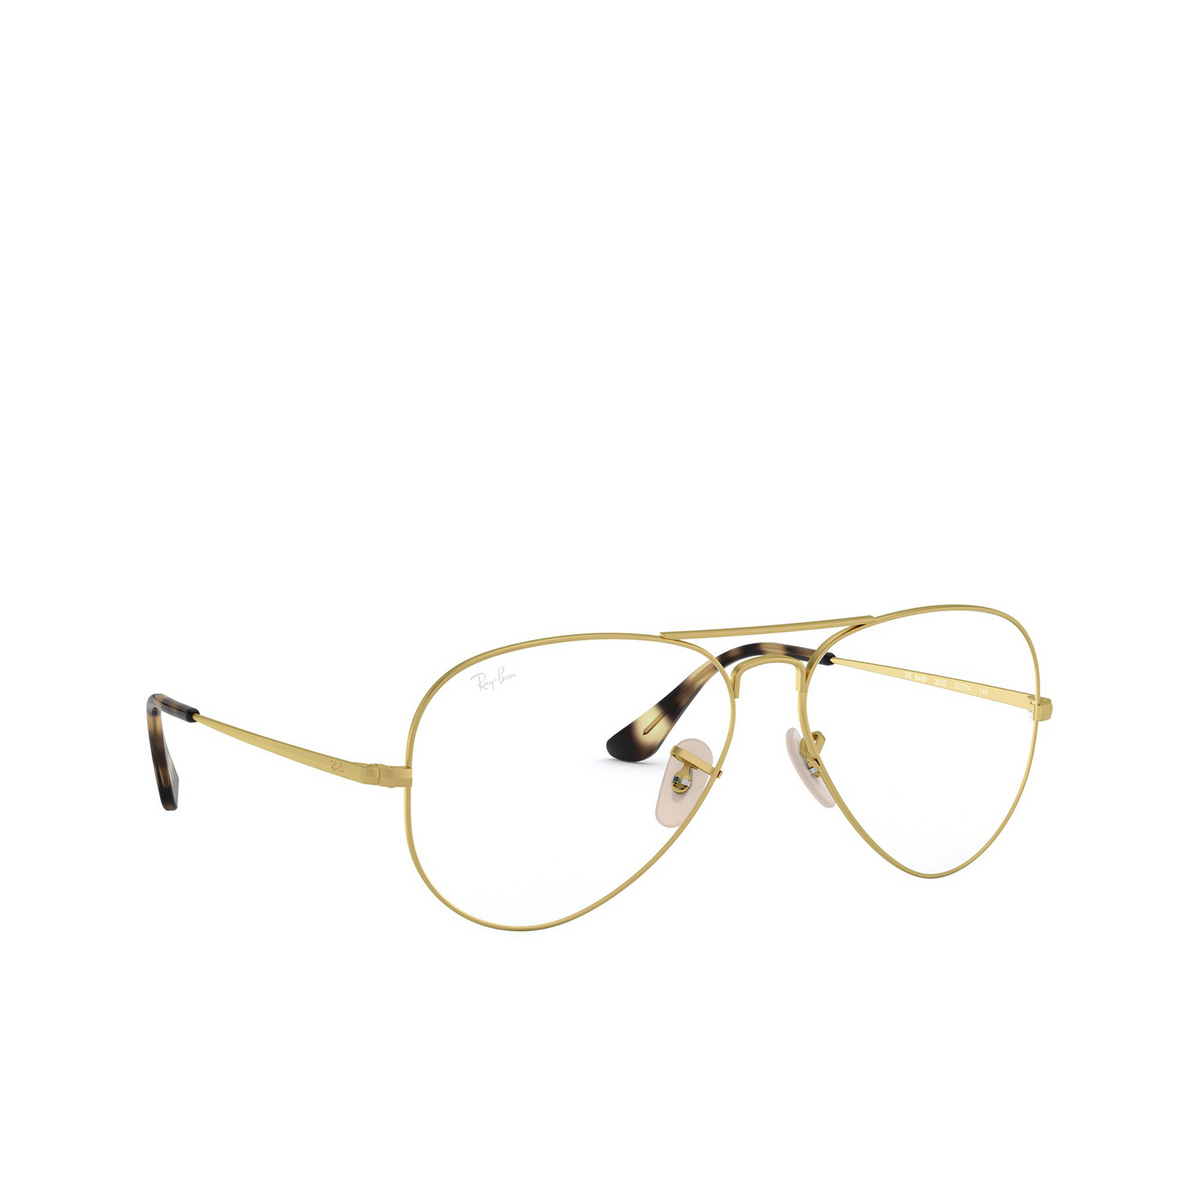 Ray-Ban® Aviator Eyeglasses: Aviator RX6489 color 3033 - three-quarters view.